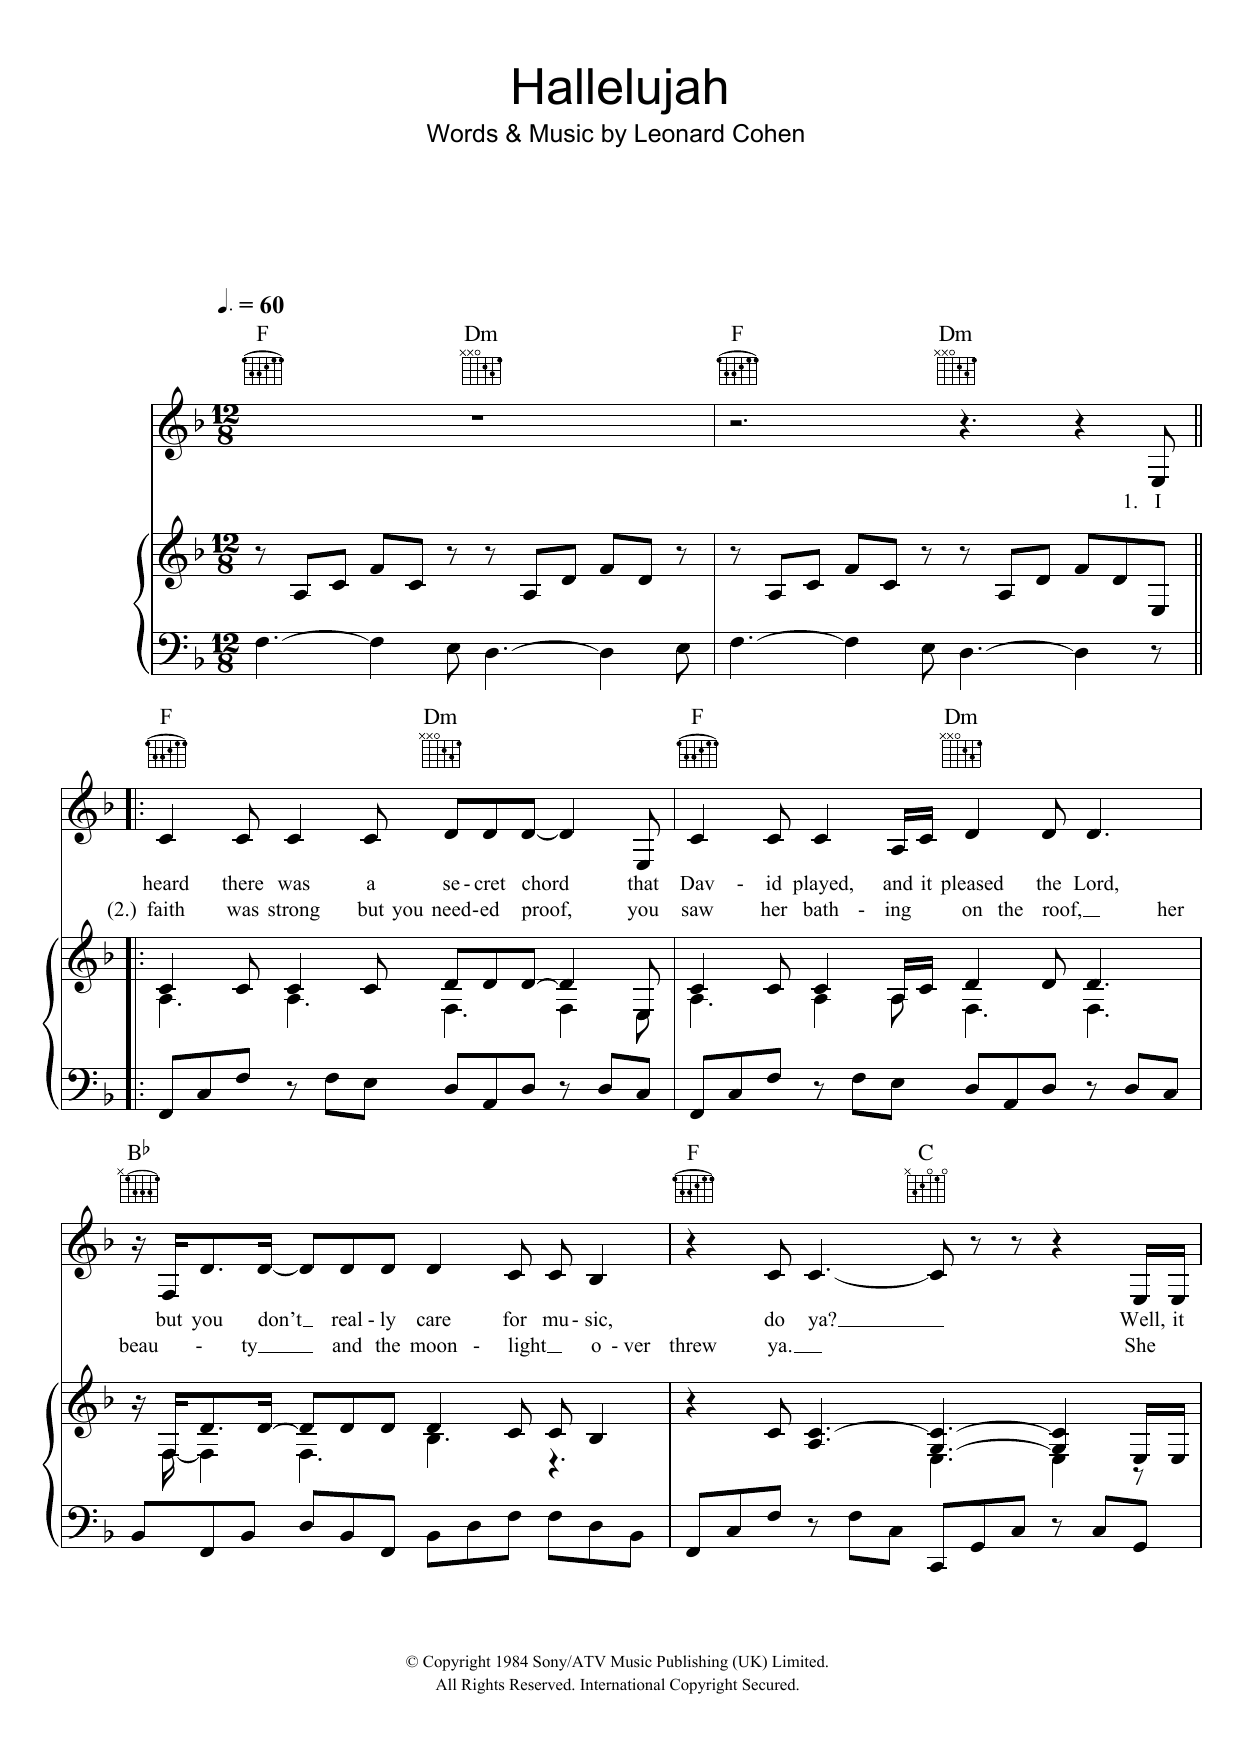 Alexandra Burke Hallelujah Sheet Music Notes & Chords for Violin - Download or Print PDF